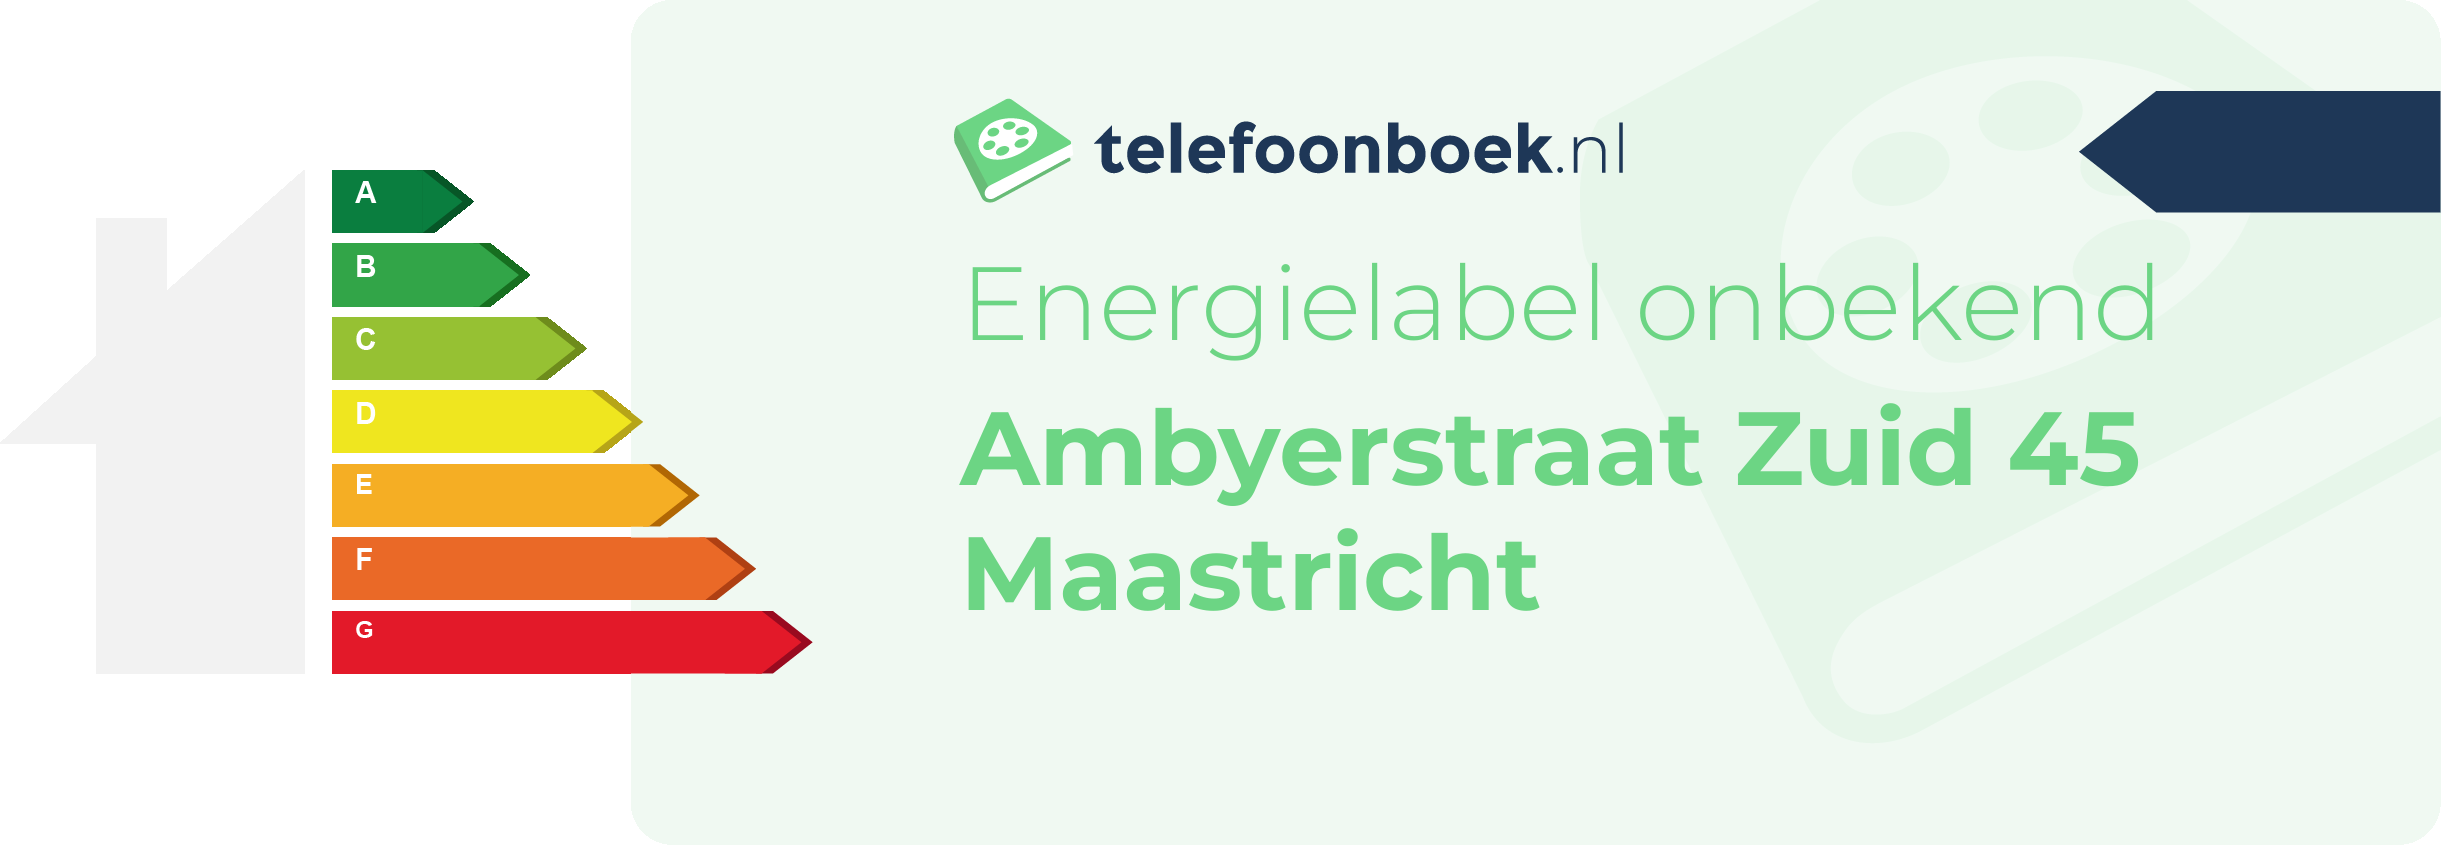 Energielabel Ambyerstraat Zuid 45 Maastricht